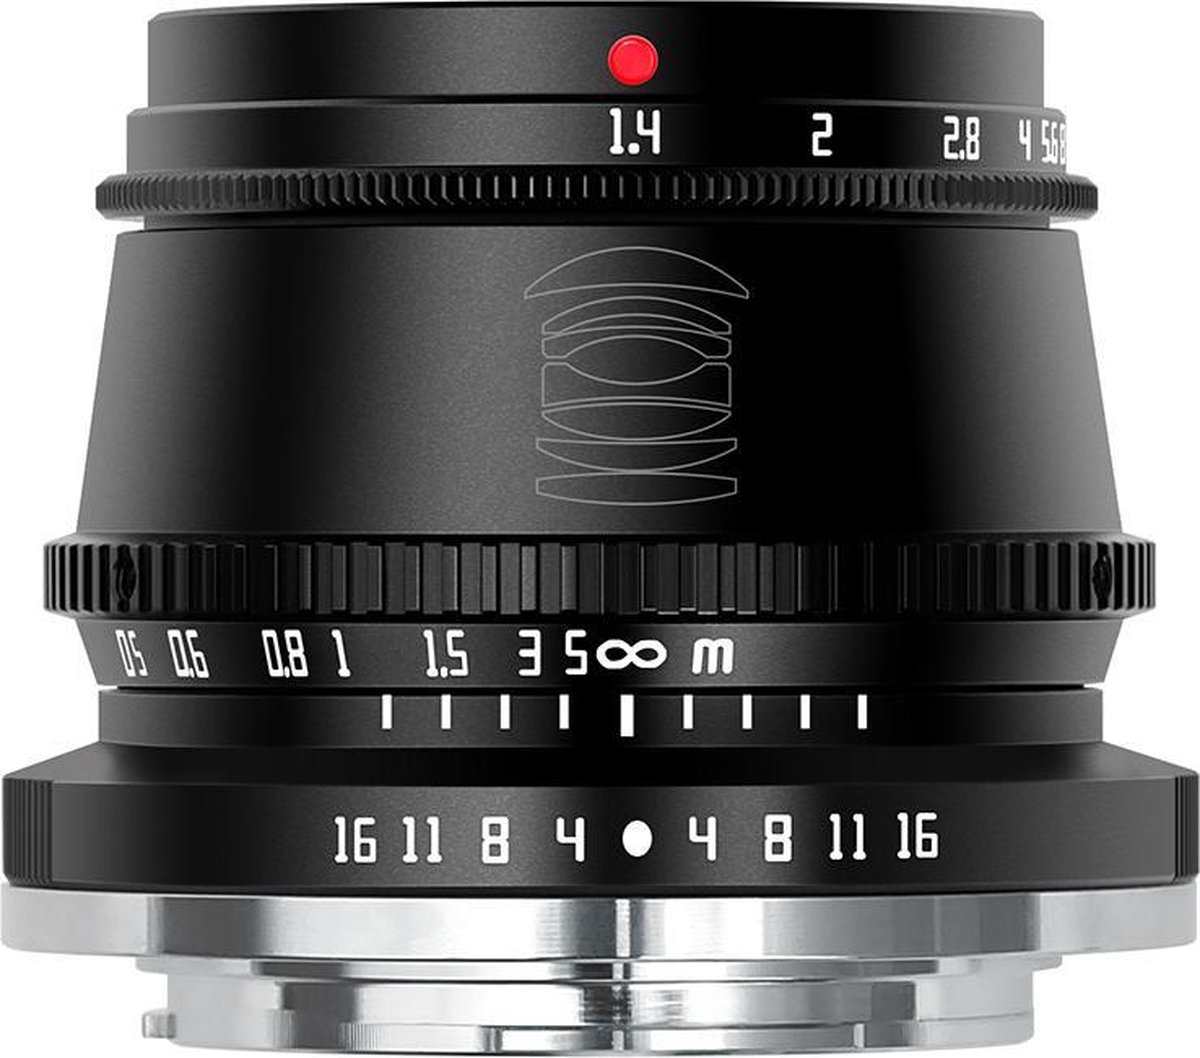 TT Artisan - Cameralens - 35 mm F1.4 APS-C voor Leica / Sigma L-vatting, zwart